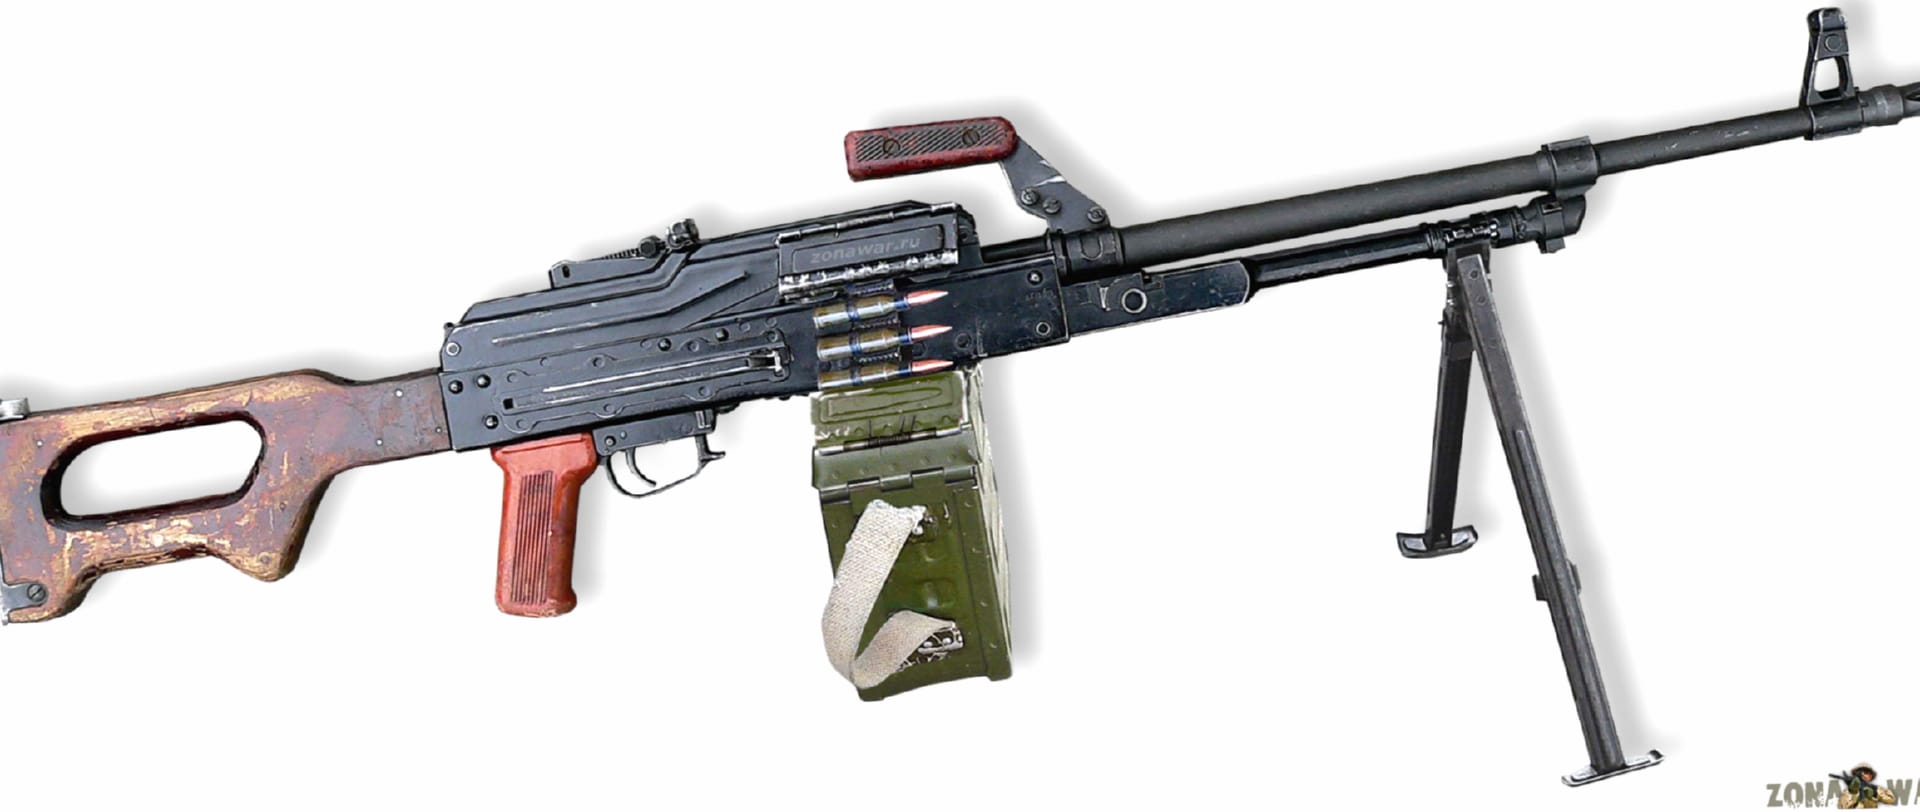 Kalashnikov Pk Rifle at 1600 x 1200 size wallpapers HD quality